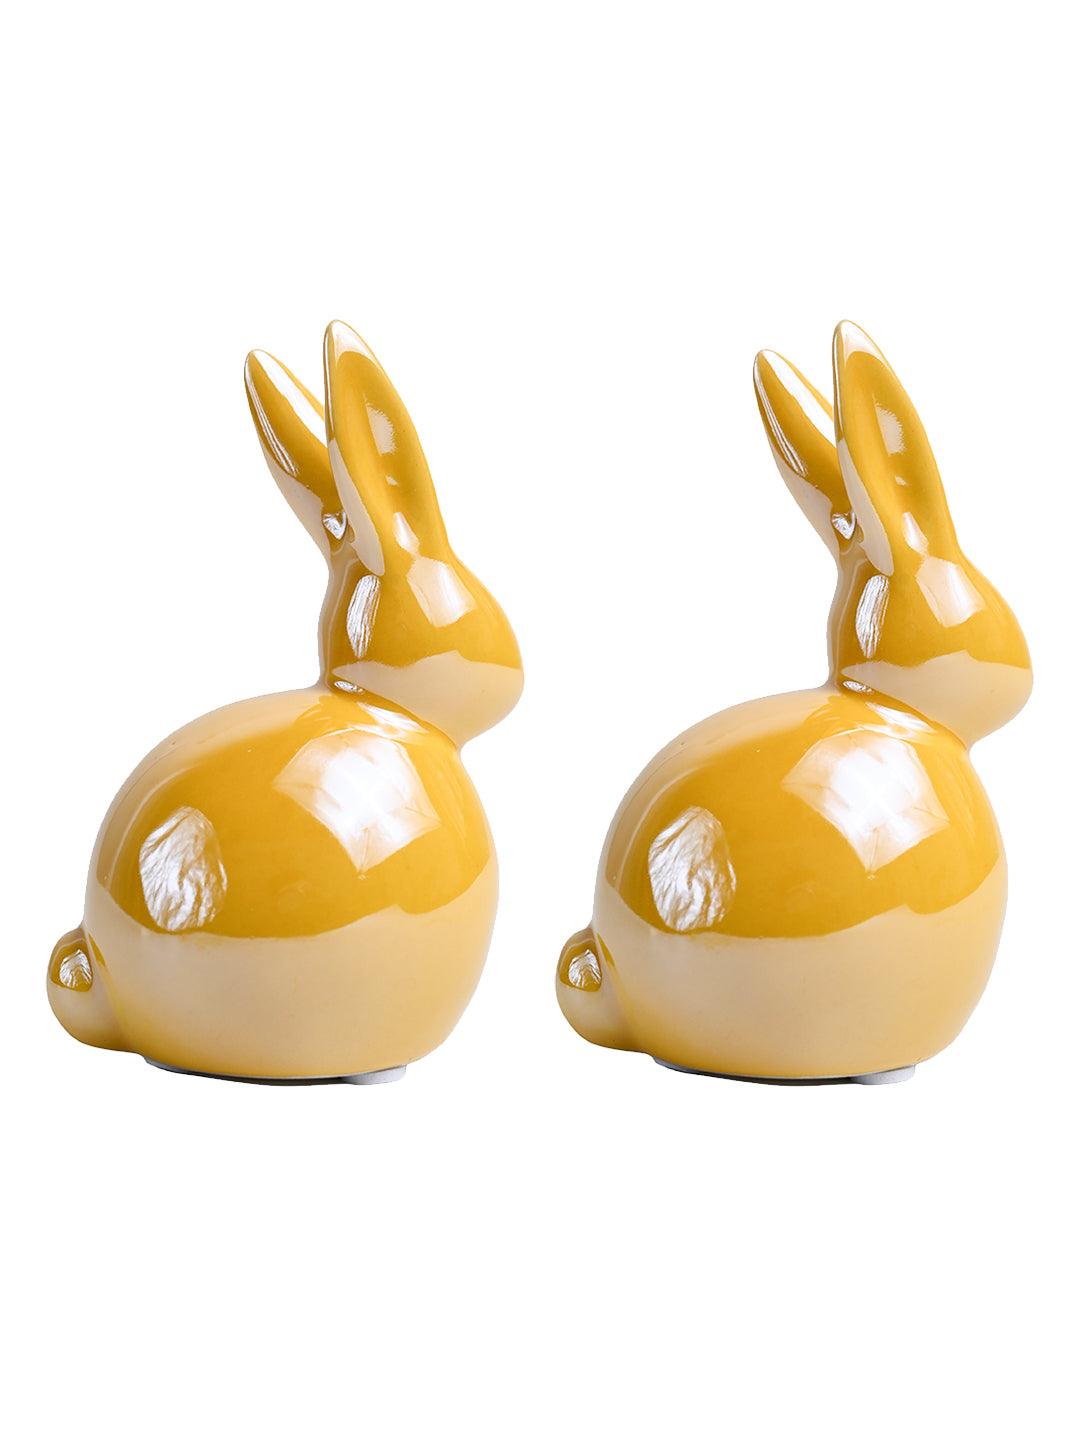 VON CASA Ceramic Decorative Rabbit - Yellow, Set Of 2 - MARKET99